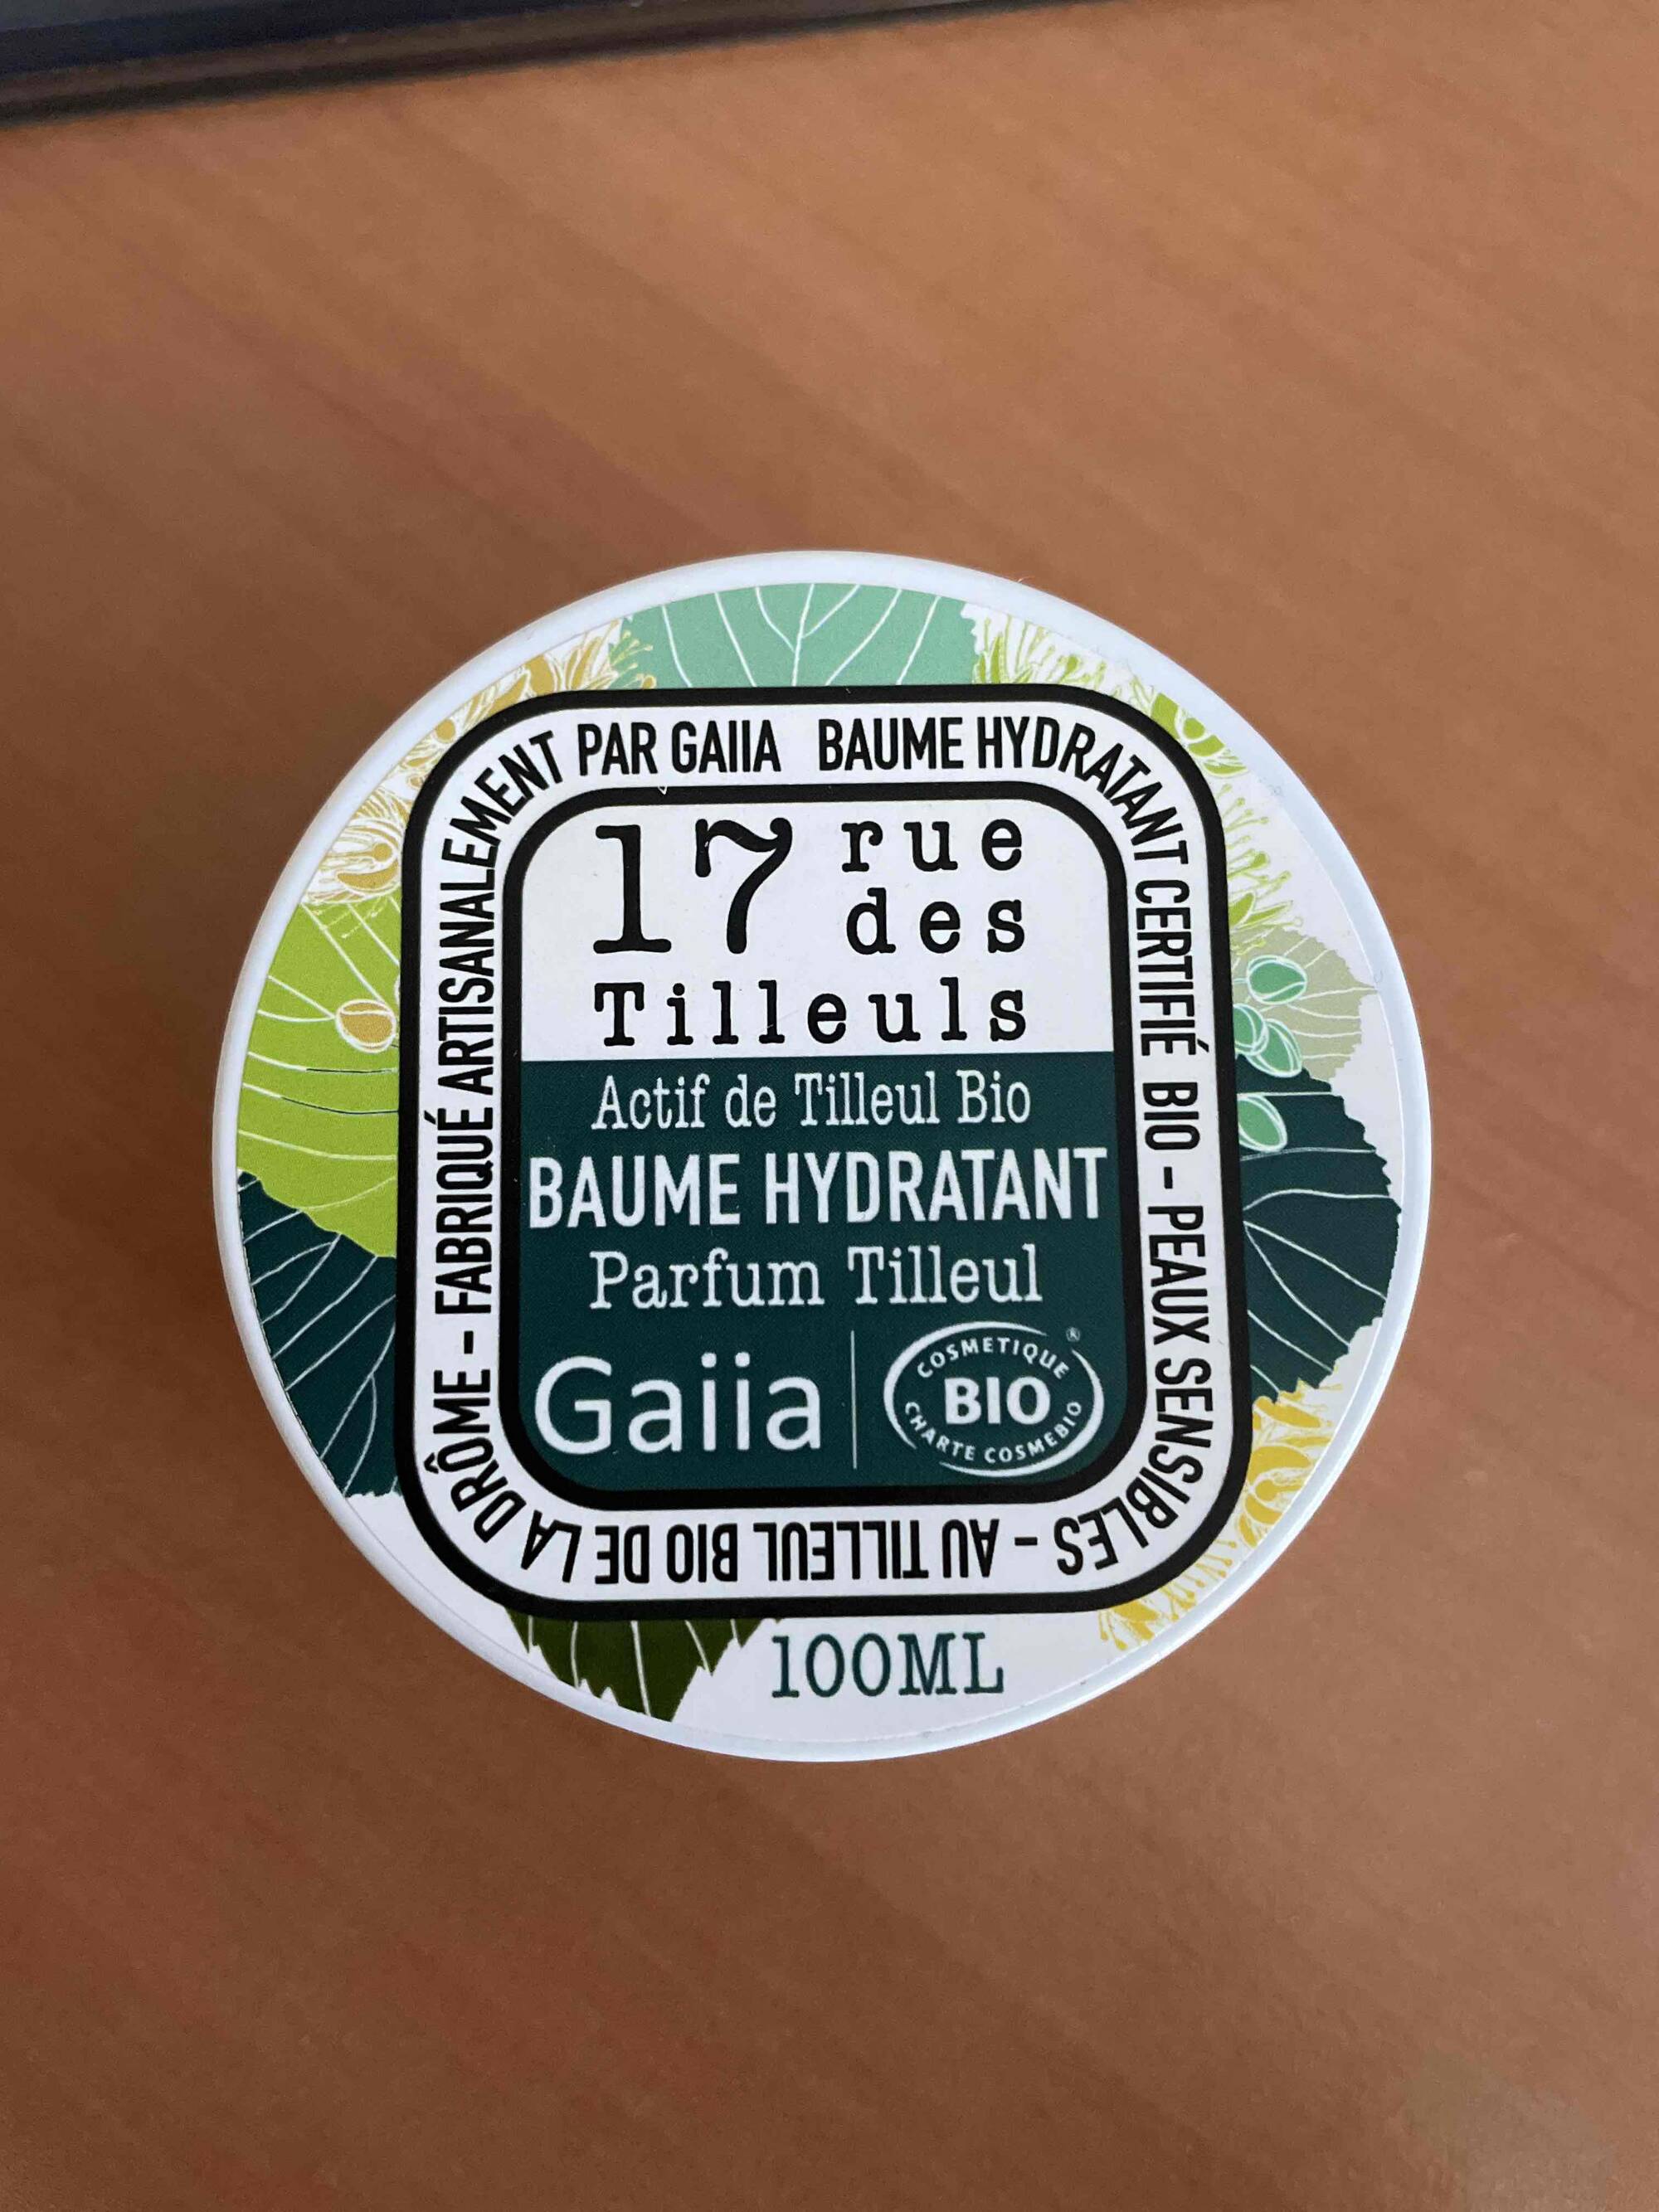 GAIIA - Baume hydratant parfum tilleul bio